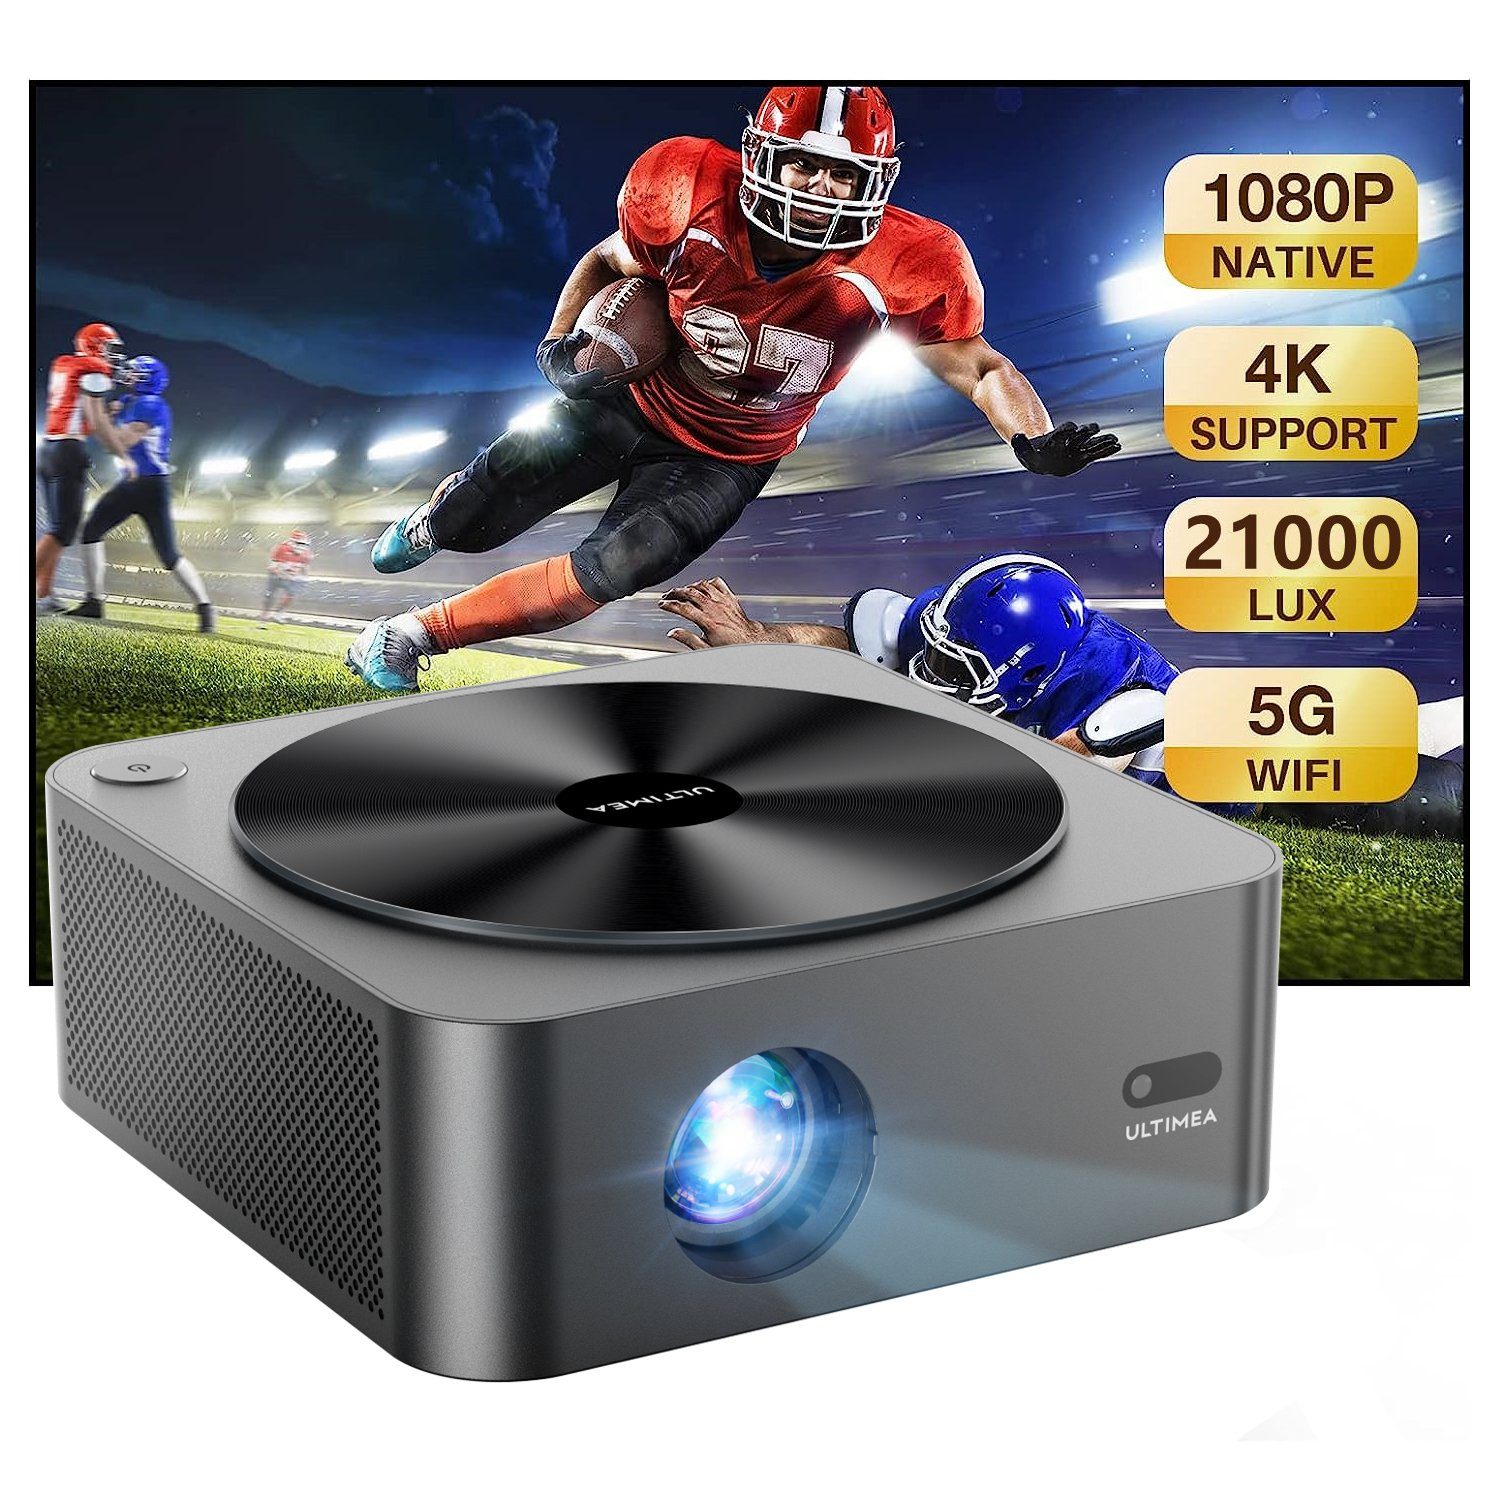 Ultimea Native 1080P Full HD Beamer (21000 lm, 15000:1, 1920 x 1080 px, Full HD,4K-Decodierung&HDR10, Autofokus&6D-Autotrapezkorrektur) schwarz